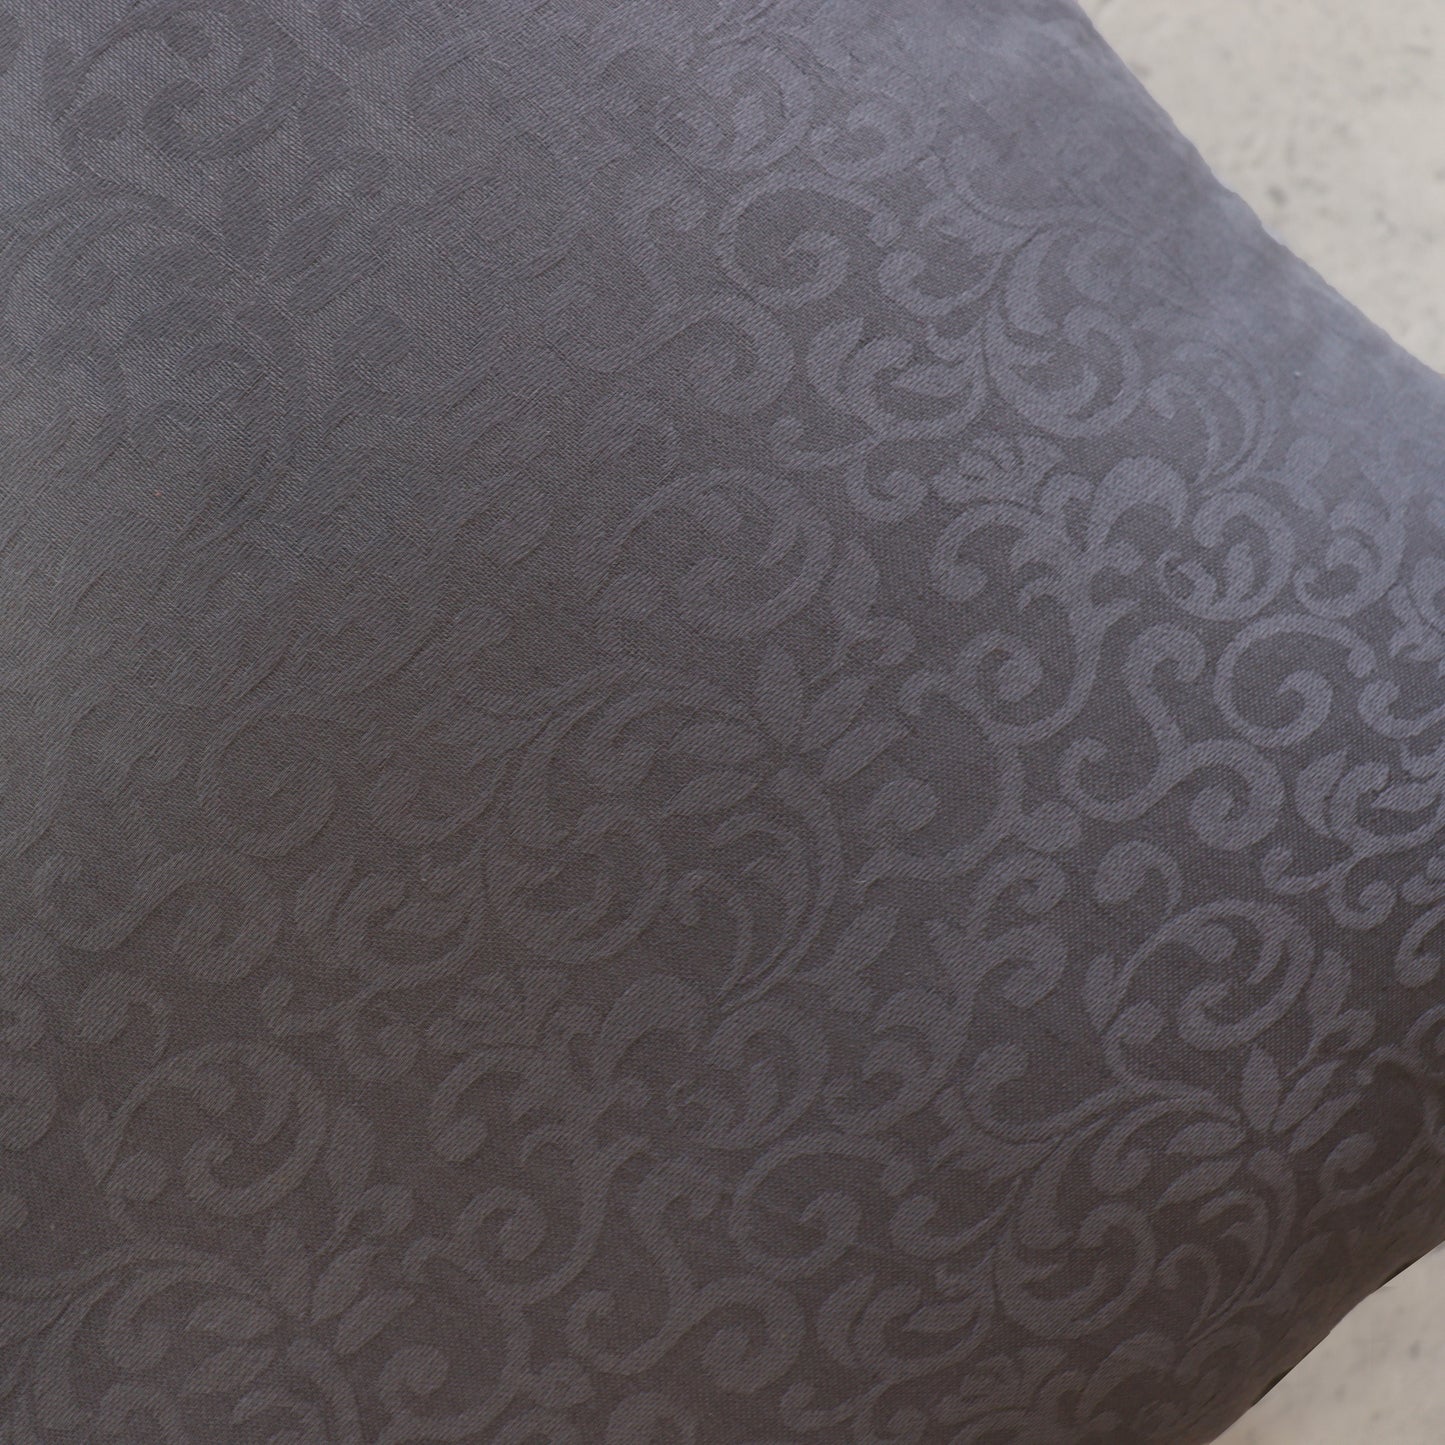 Stripes Cushion Cover (Grey)